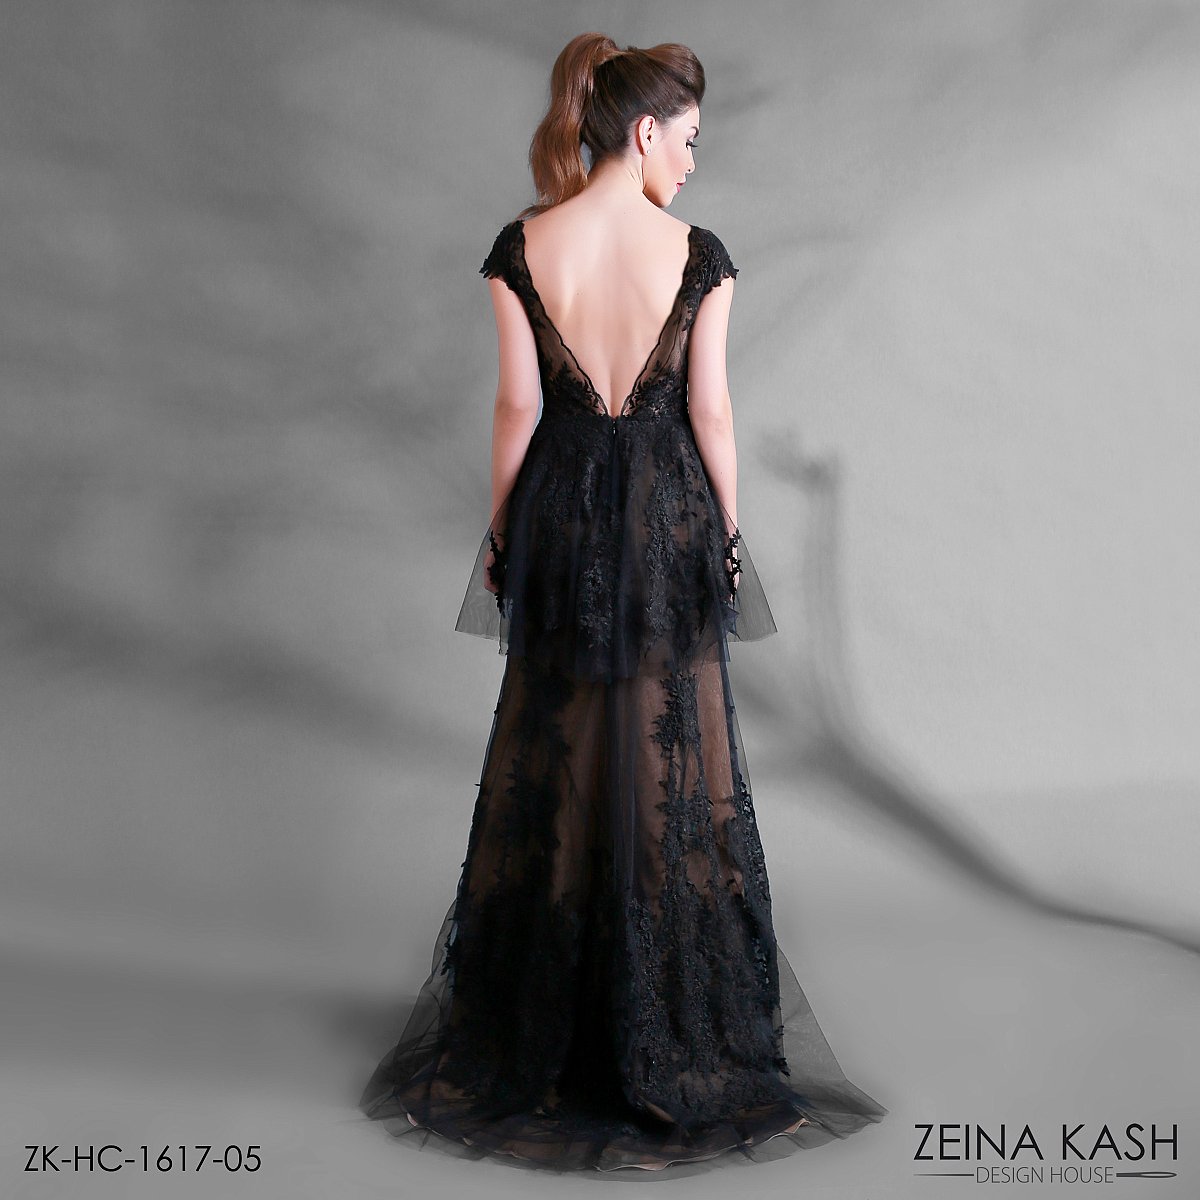 Zeina Kash Sonbahar-Kış 2016-2017 - Haute couture - 1